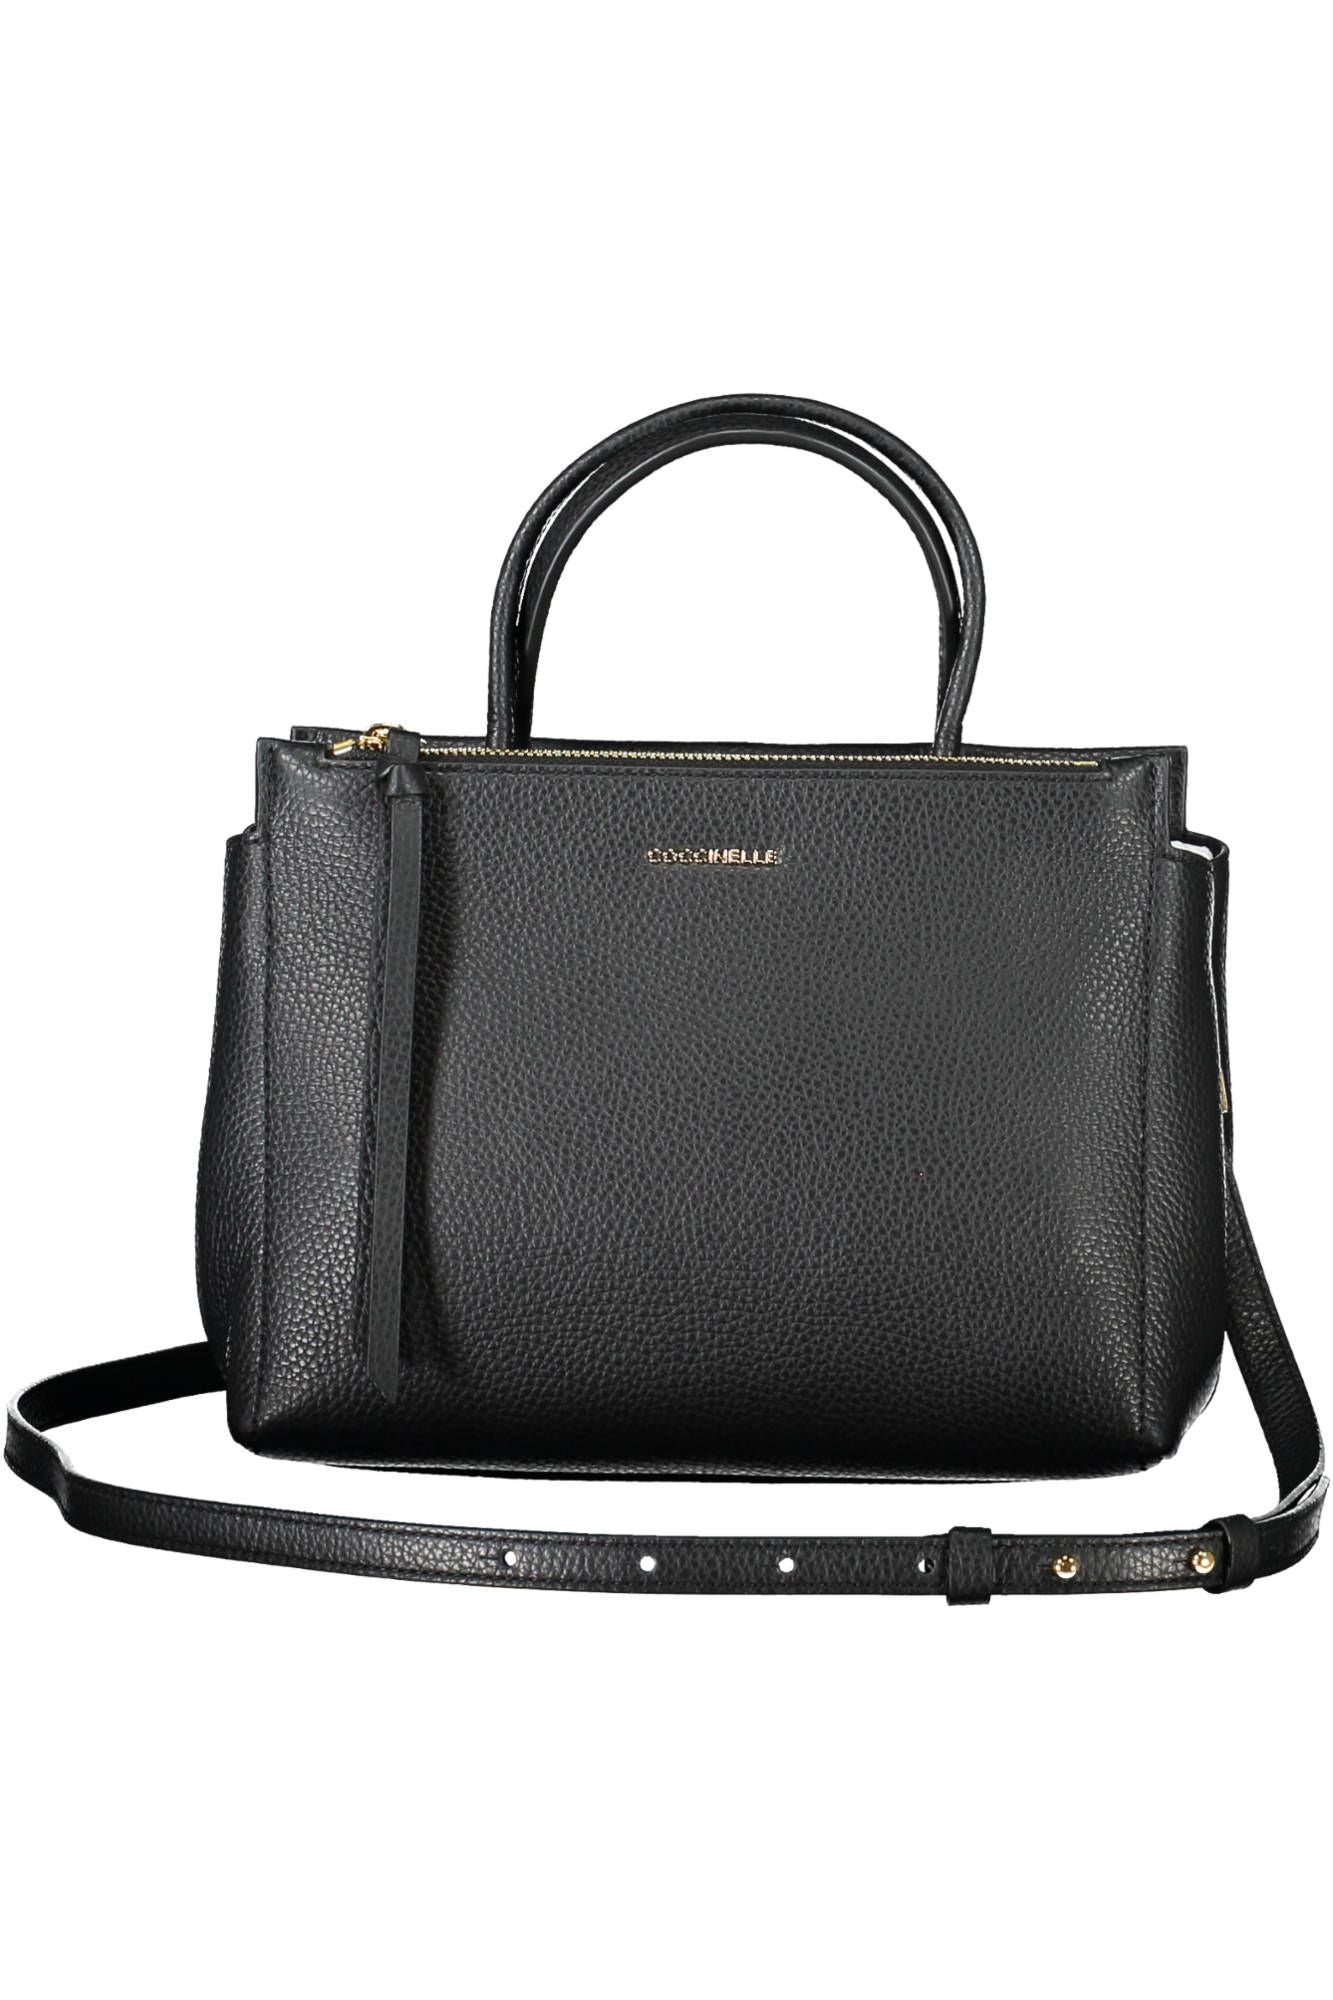 Coccinelle Elegant Black Leather Handbag With Versatile Straps